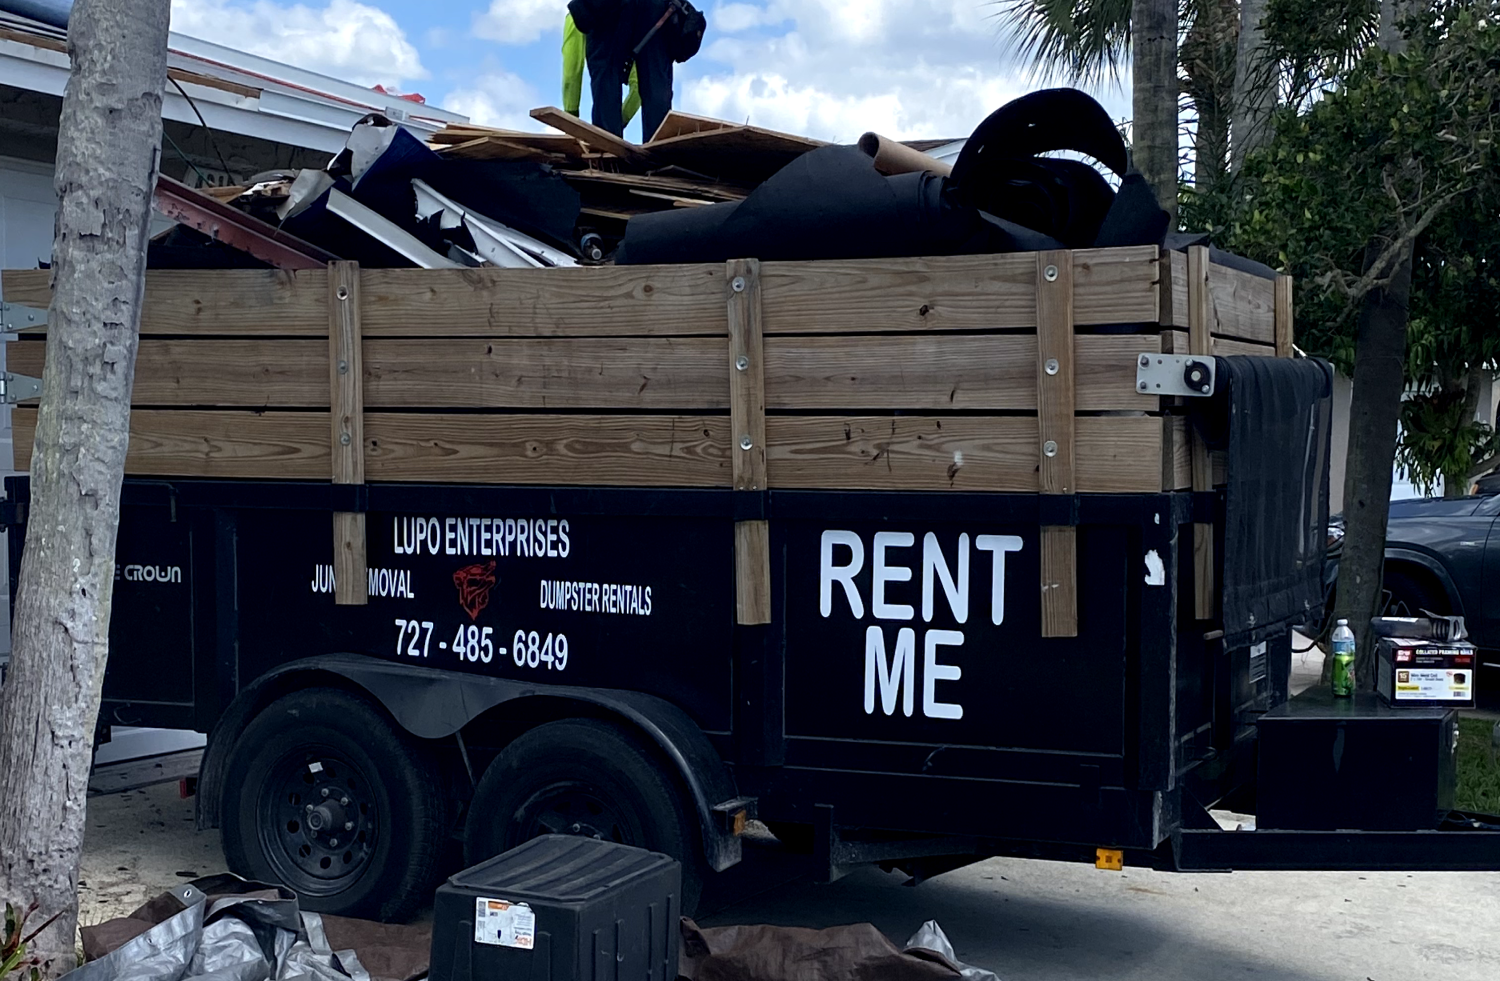 Dumpster rental in Lutz, FL